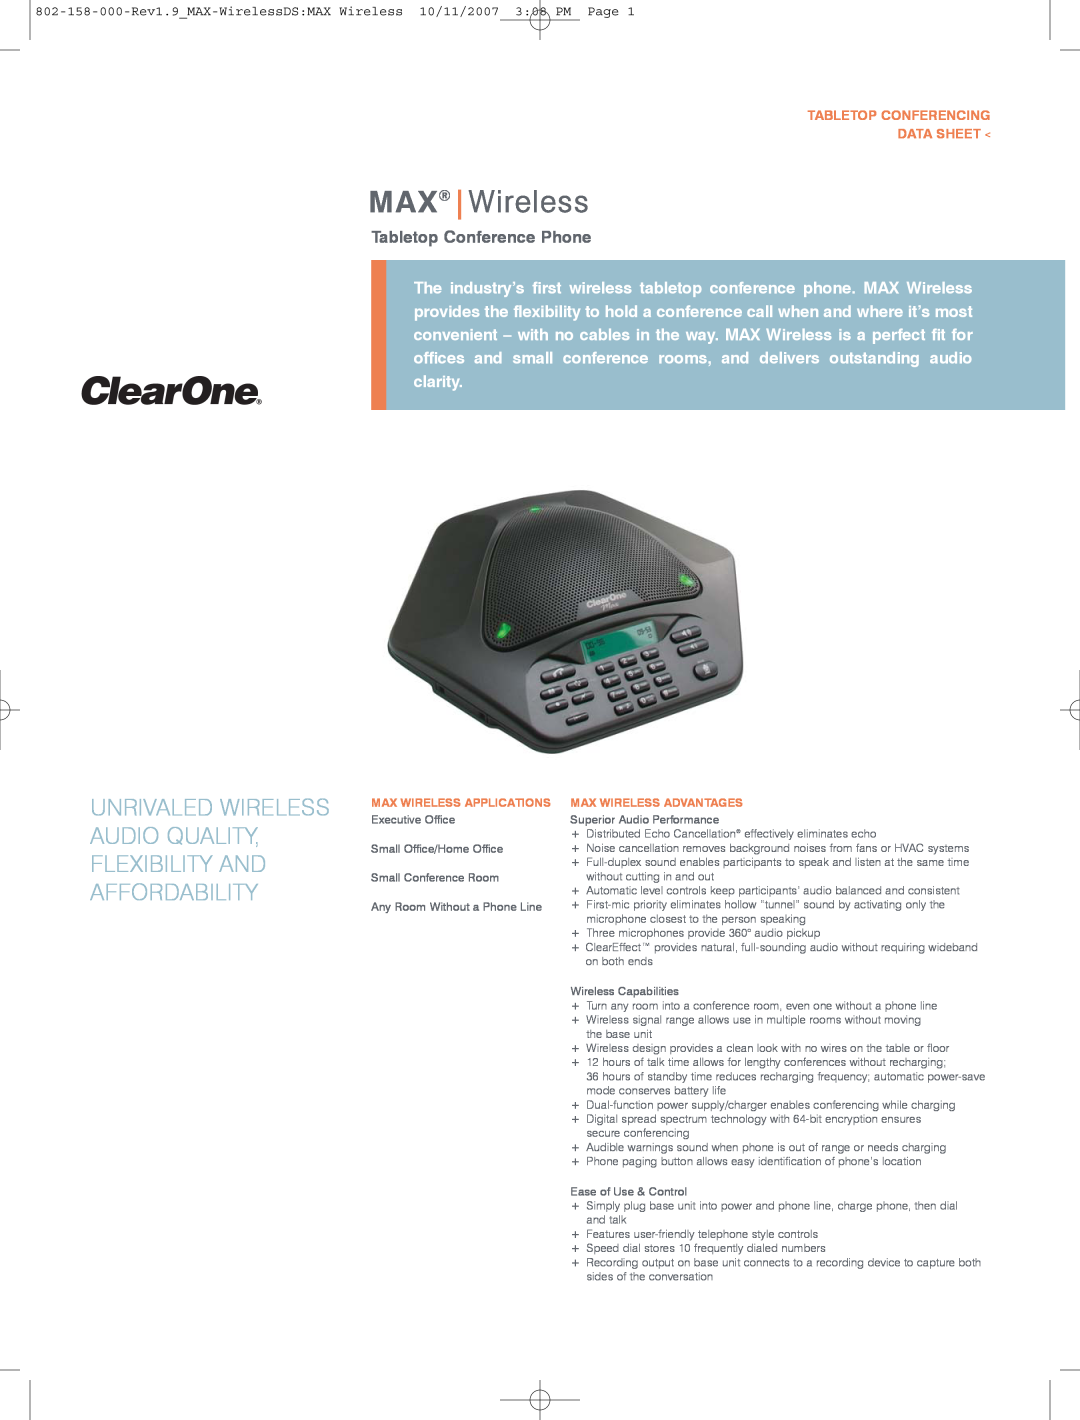 ClearOne comm 910-158-400 manual 802-158-000-Rev1.9MAX-WirelessDSMAX Wireless 10/11/2007 308 PM Page, MAXWireless 